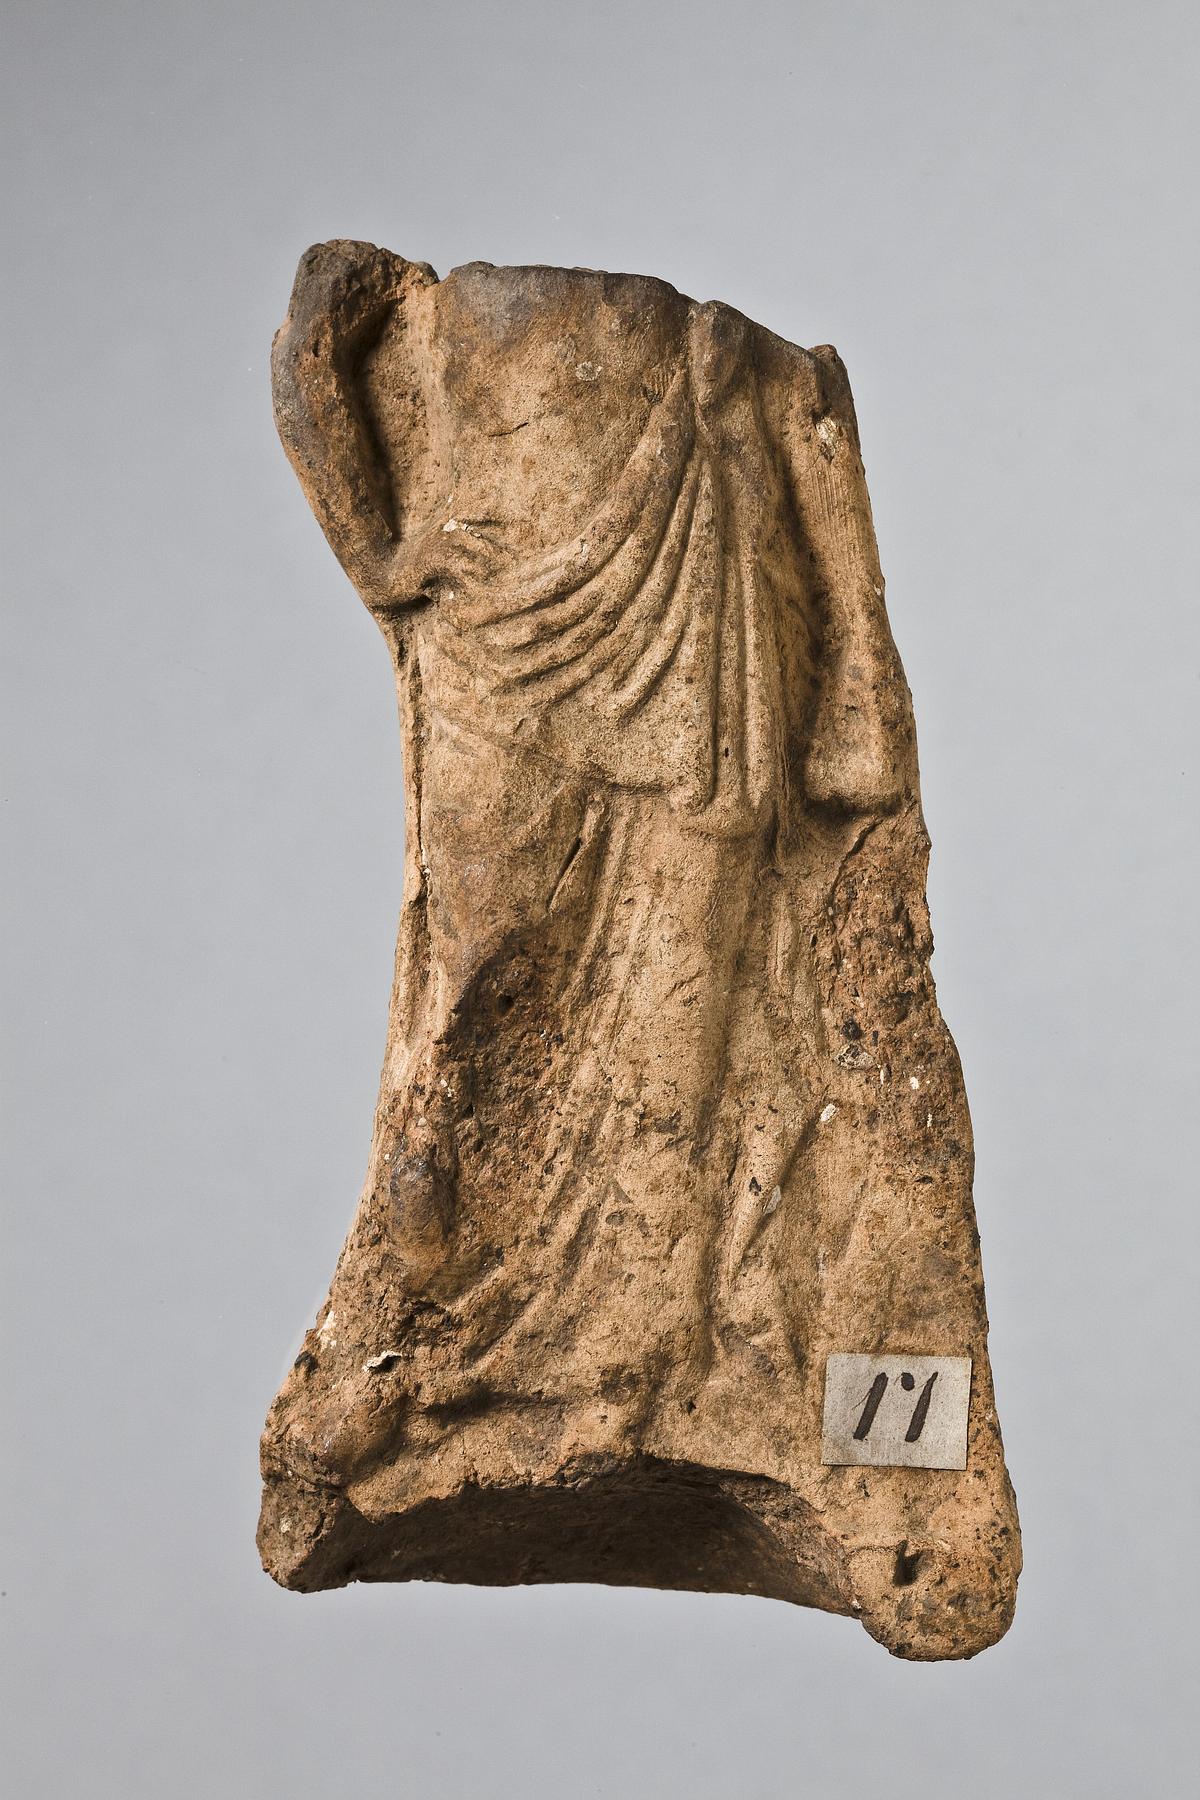 Statuette of a man, H1017